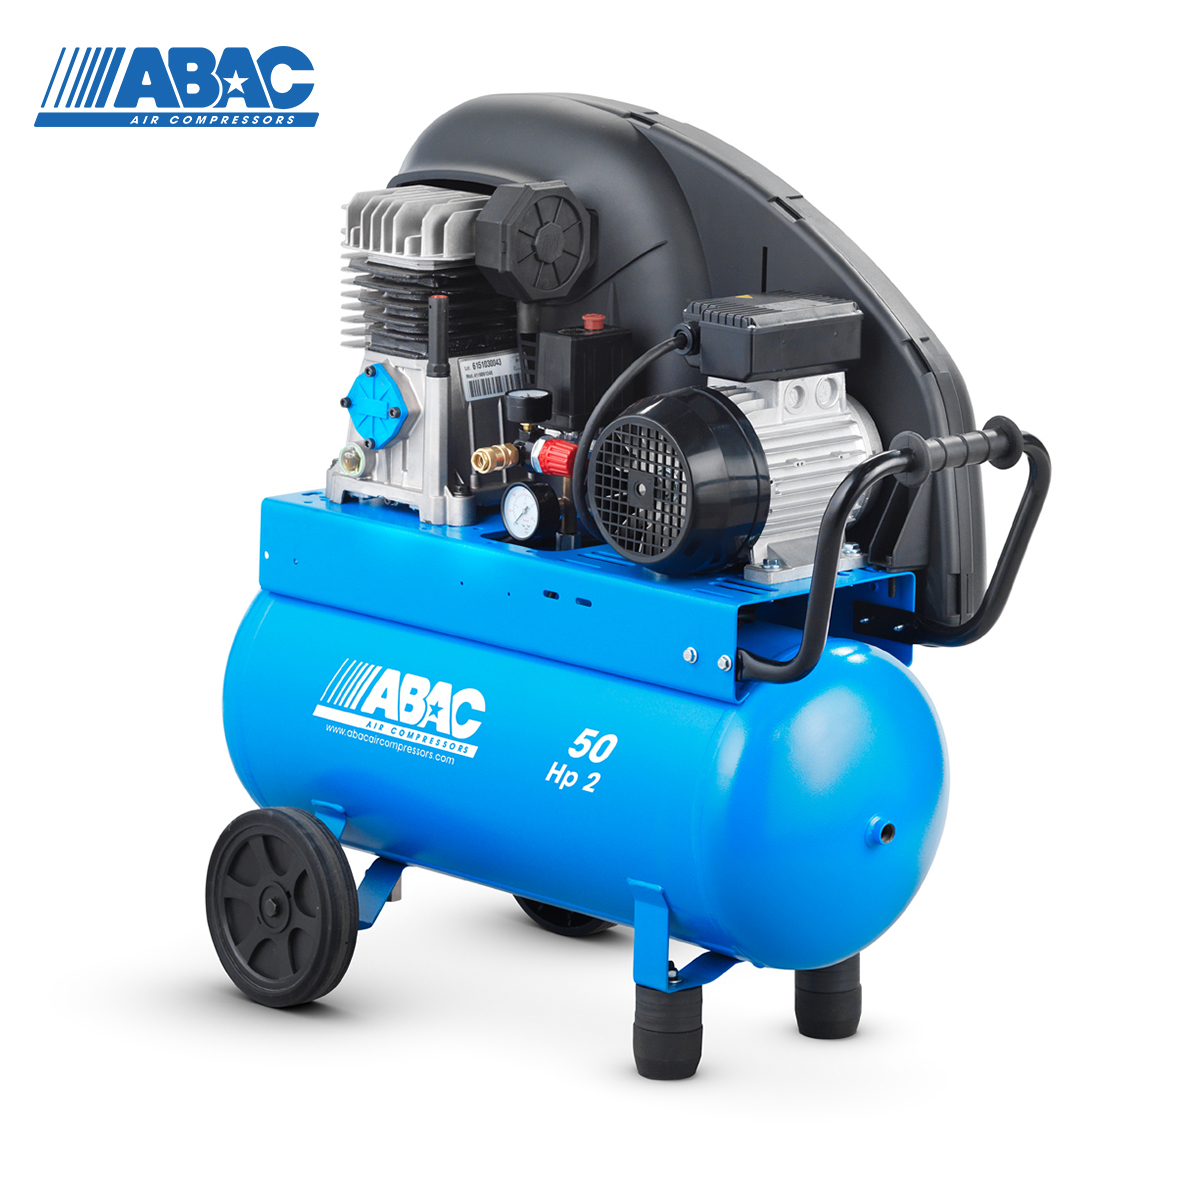 Abac PRO A29B 50 CM 2 - 1,5 kW